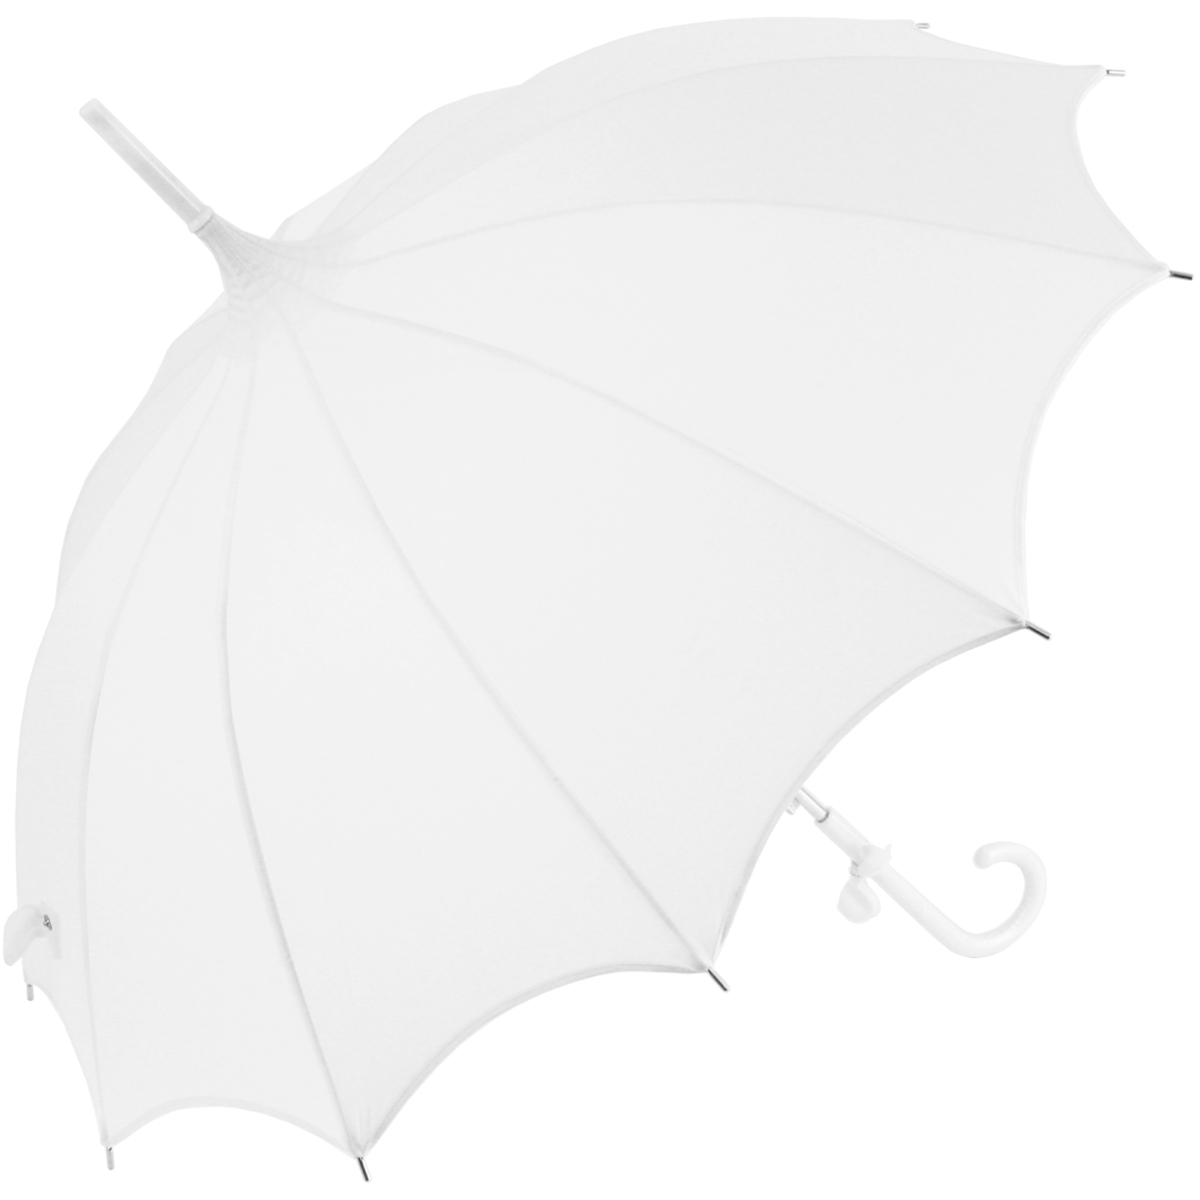 Lily Scalloped White Pagoda Umbrella by Chrysalin